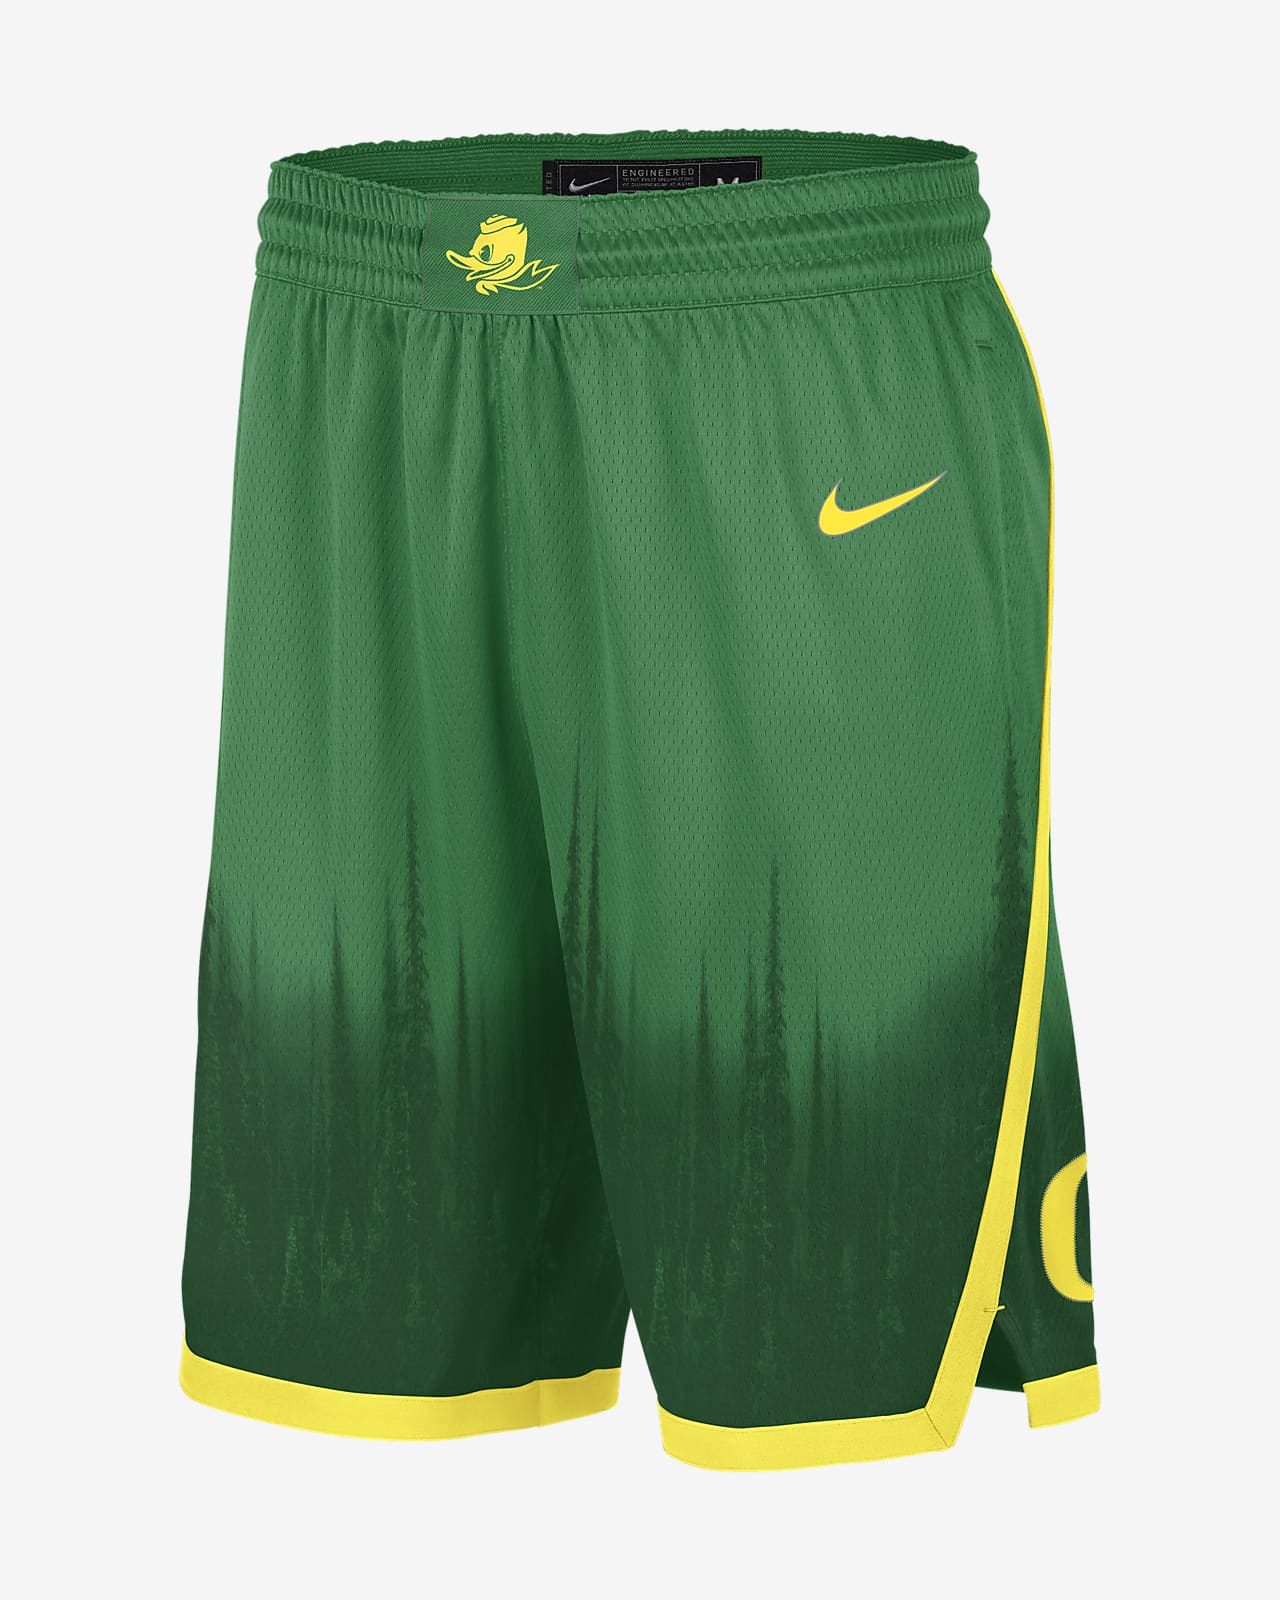 Nike College (Oregon) Men's Limited Basketball Shorts